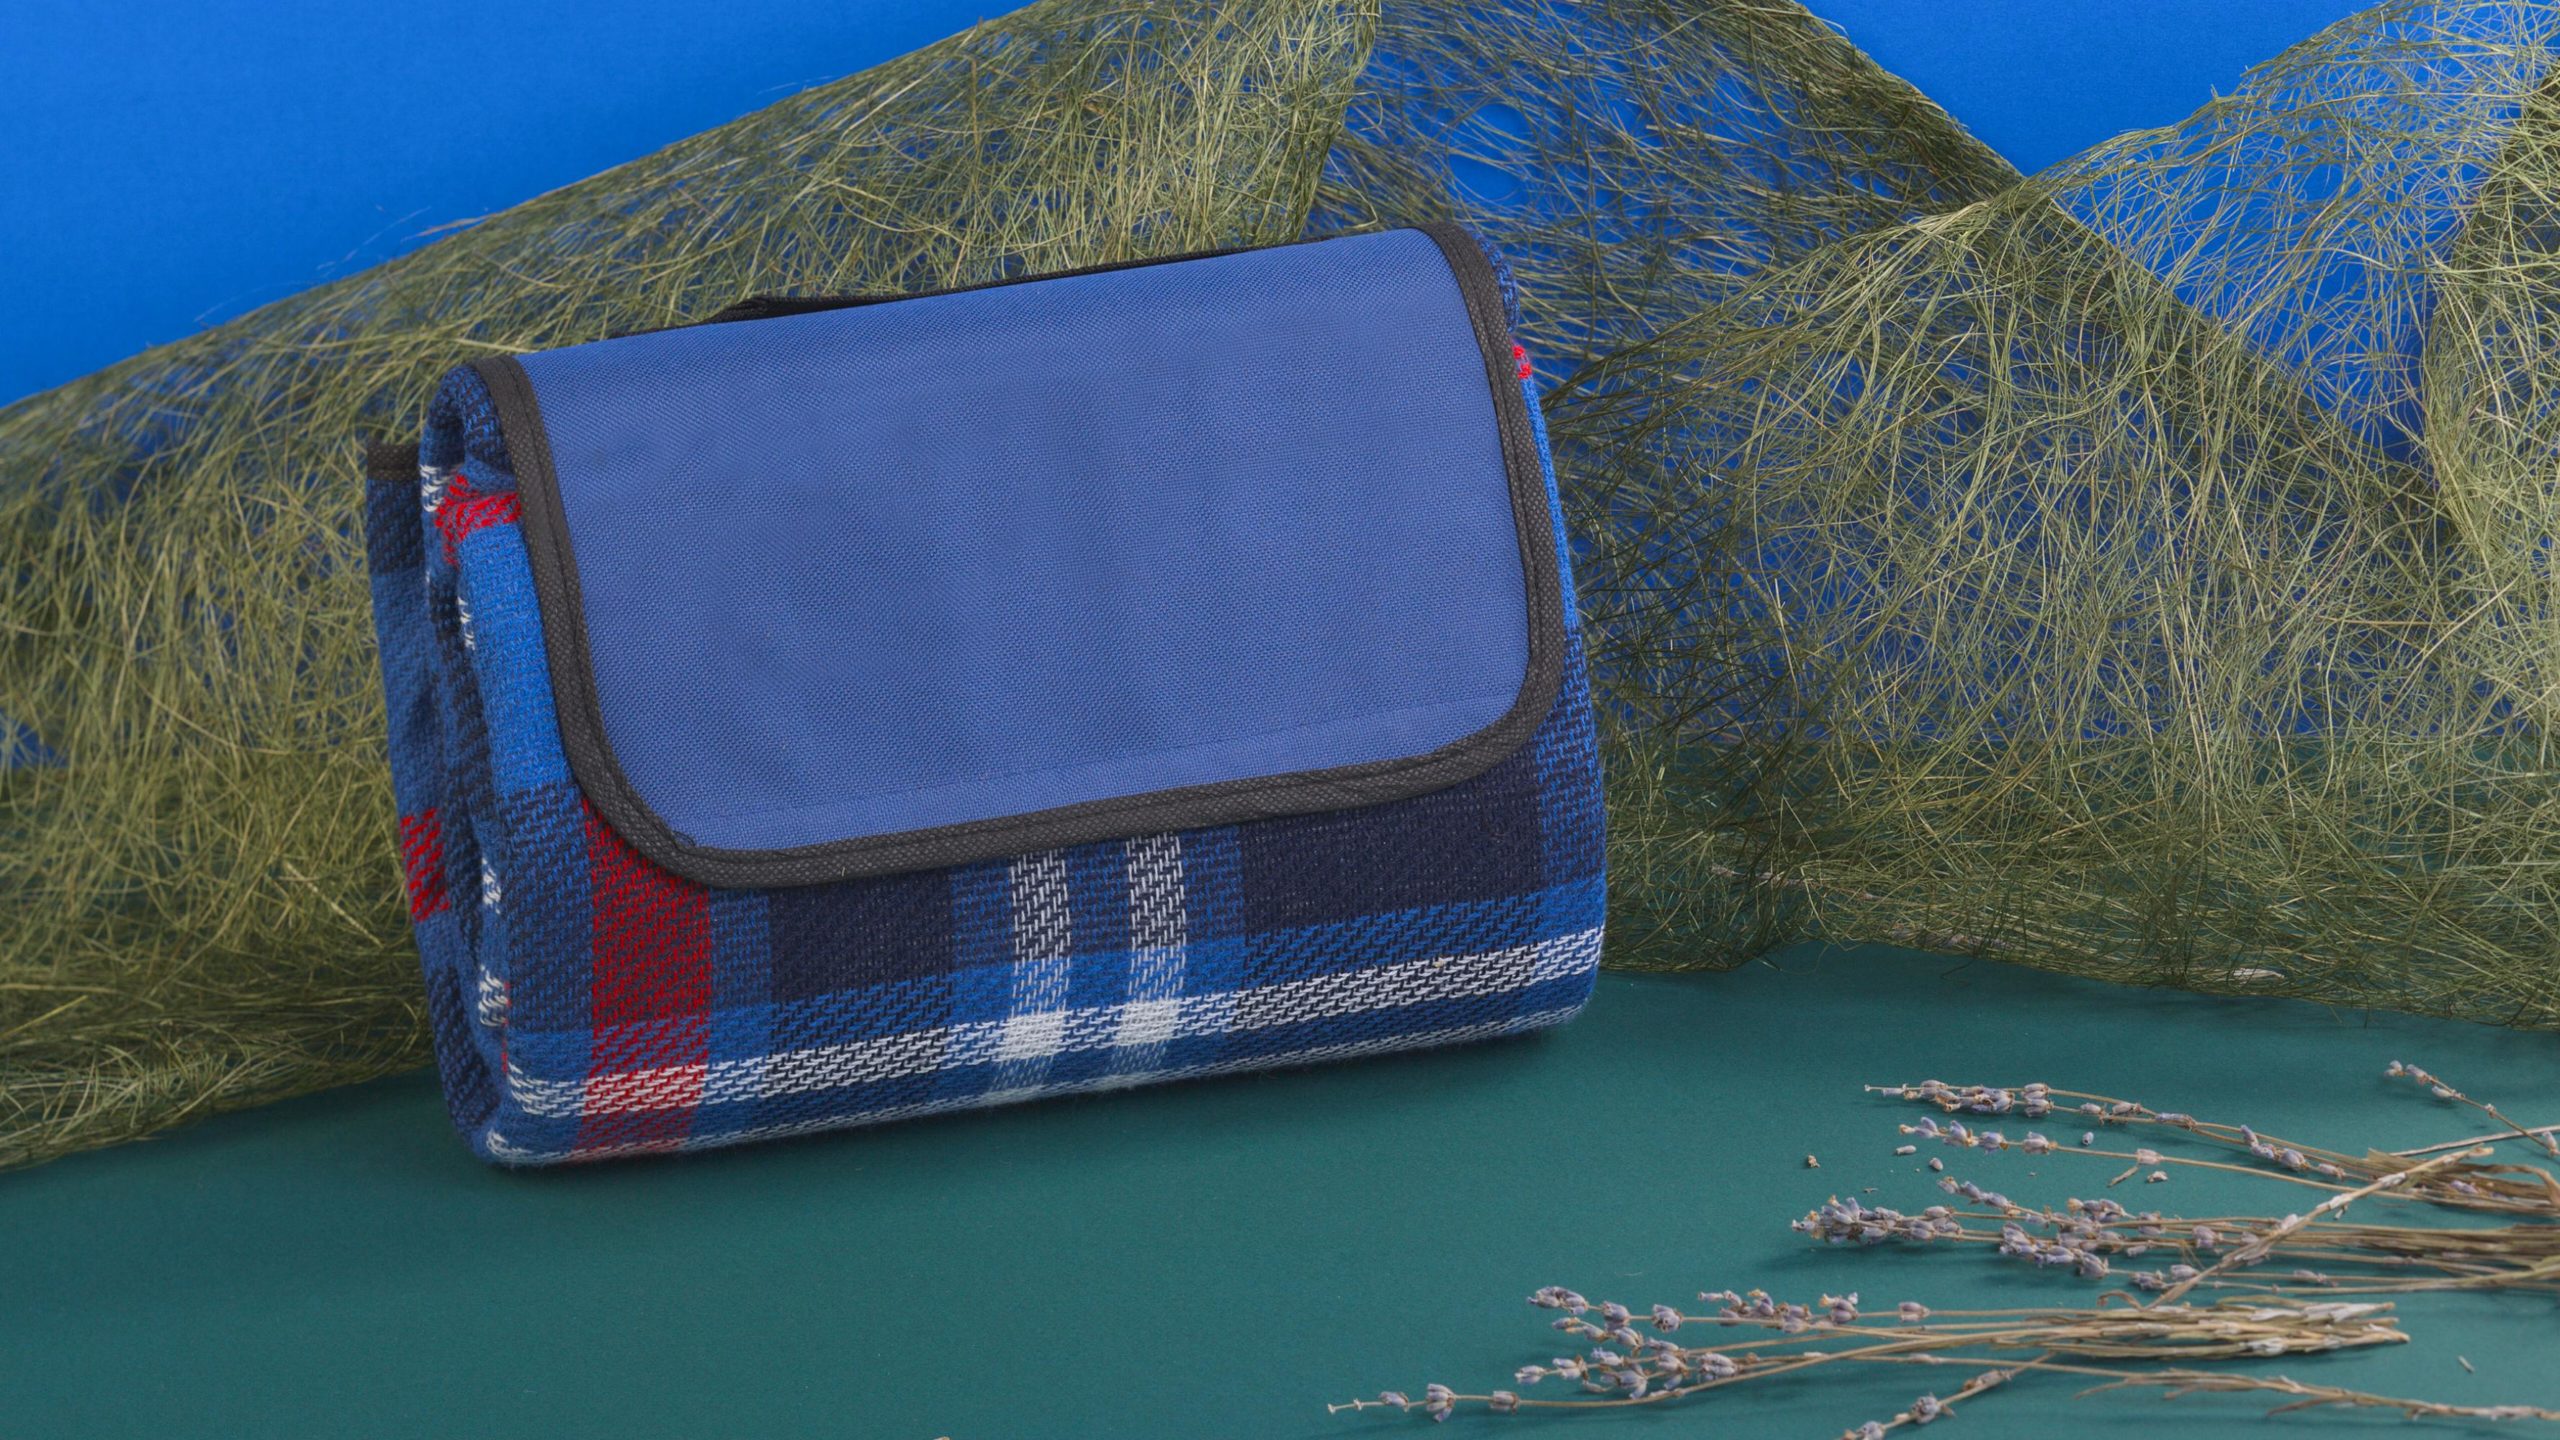 Плед для пикника "Шотландия", цвет синий, фото 1